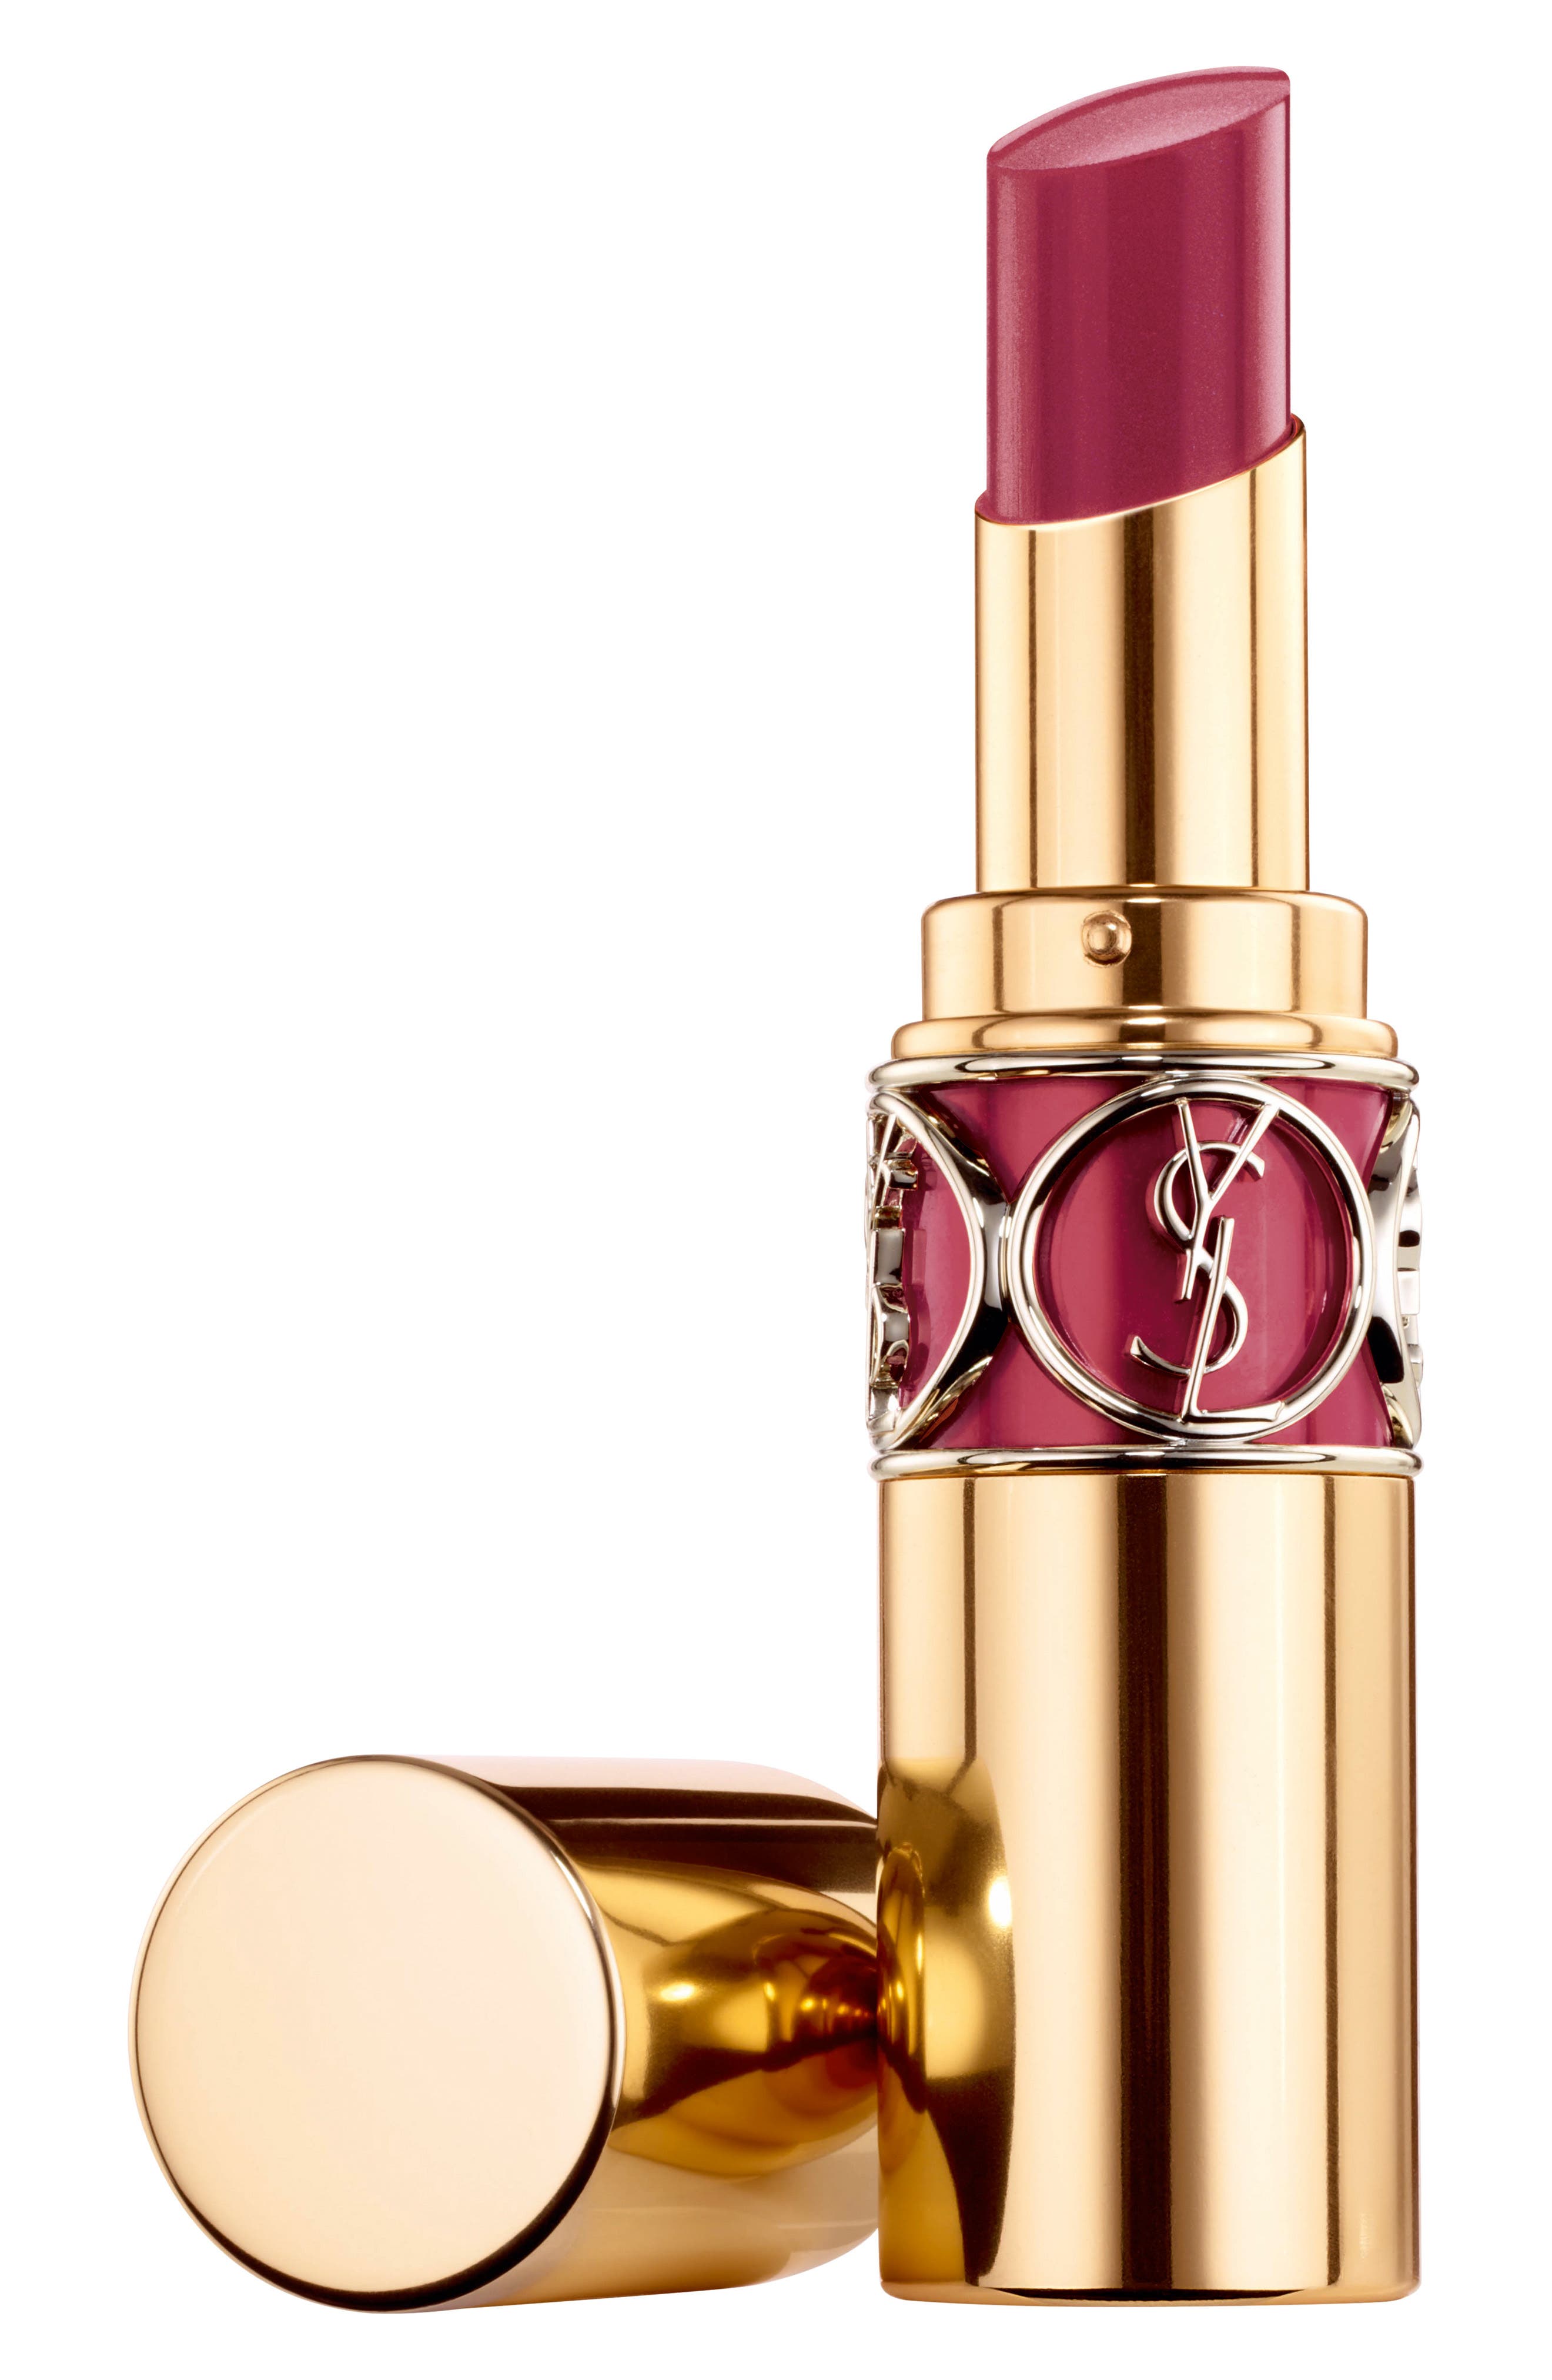 Yves Saint Laurent Rouge Volupte Shine Oil-in-Stick Lipstick Balm in 48 Smoking Plum